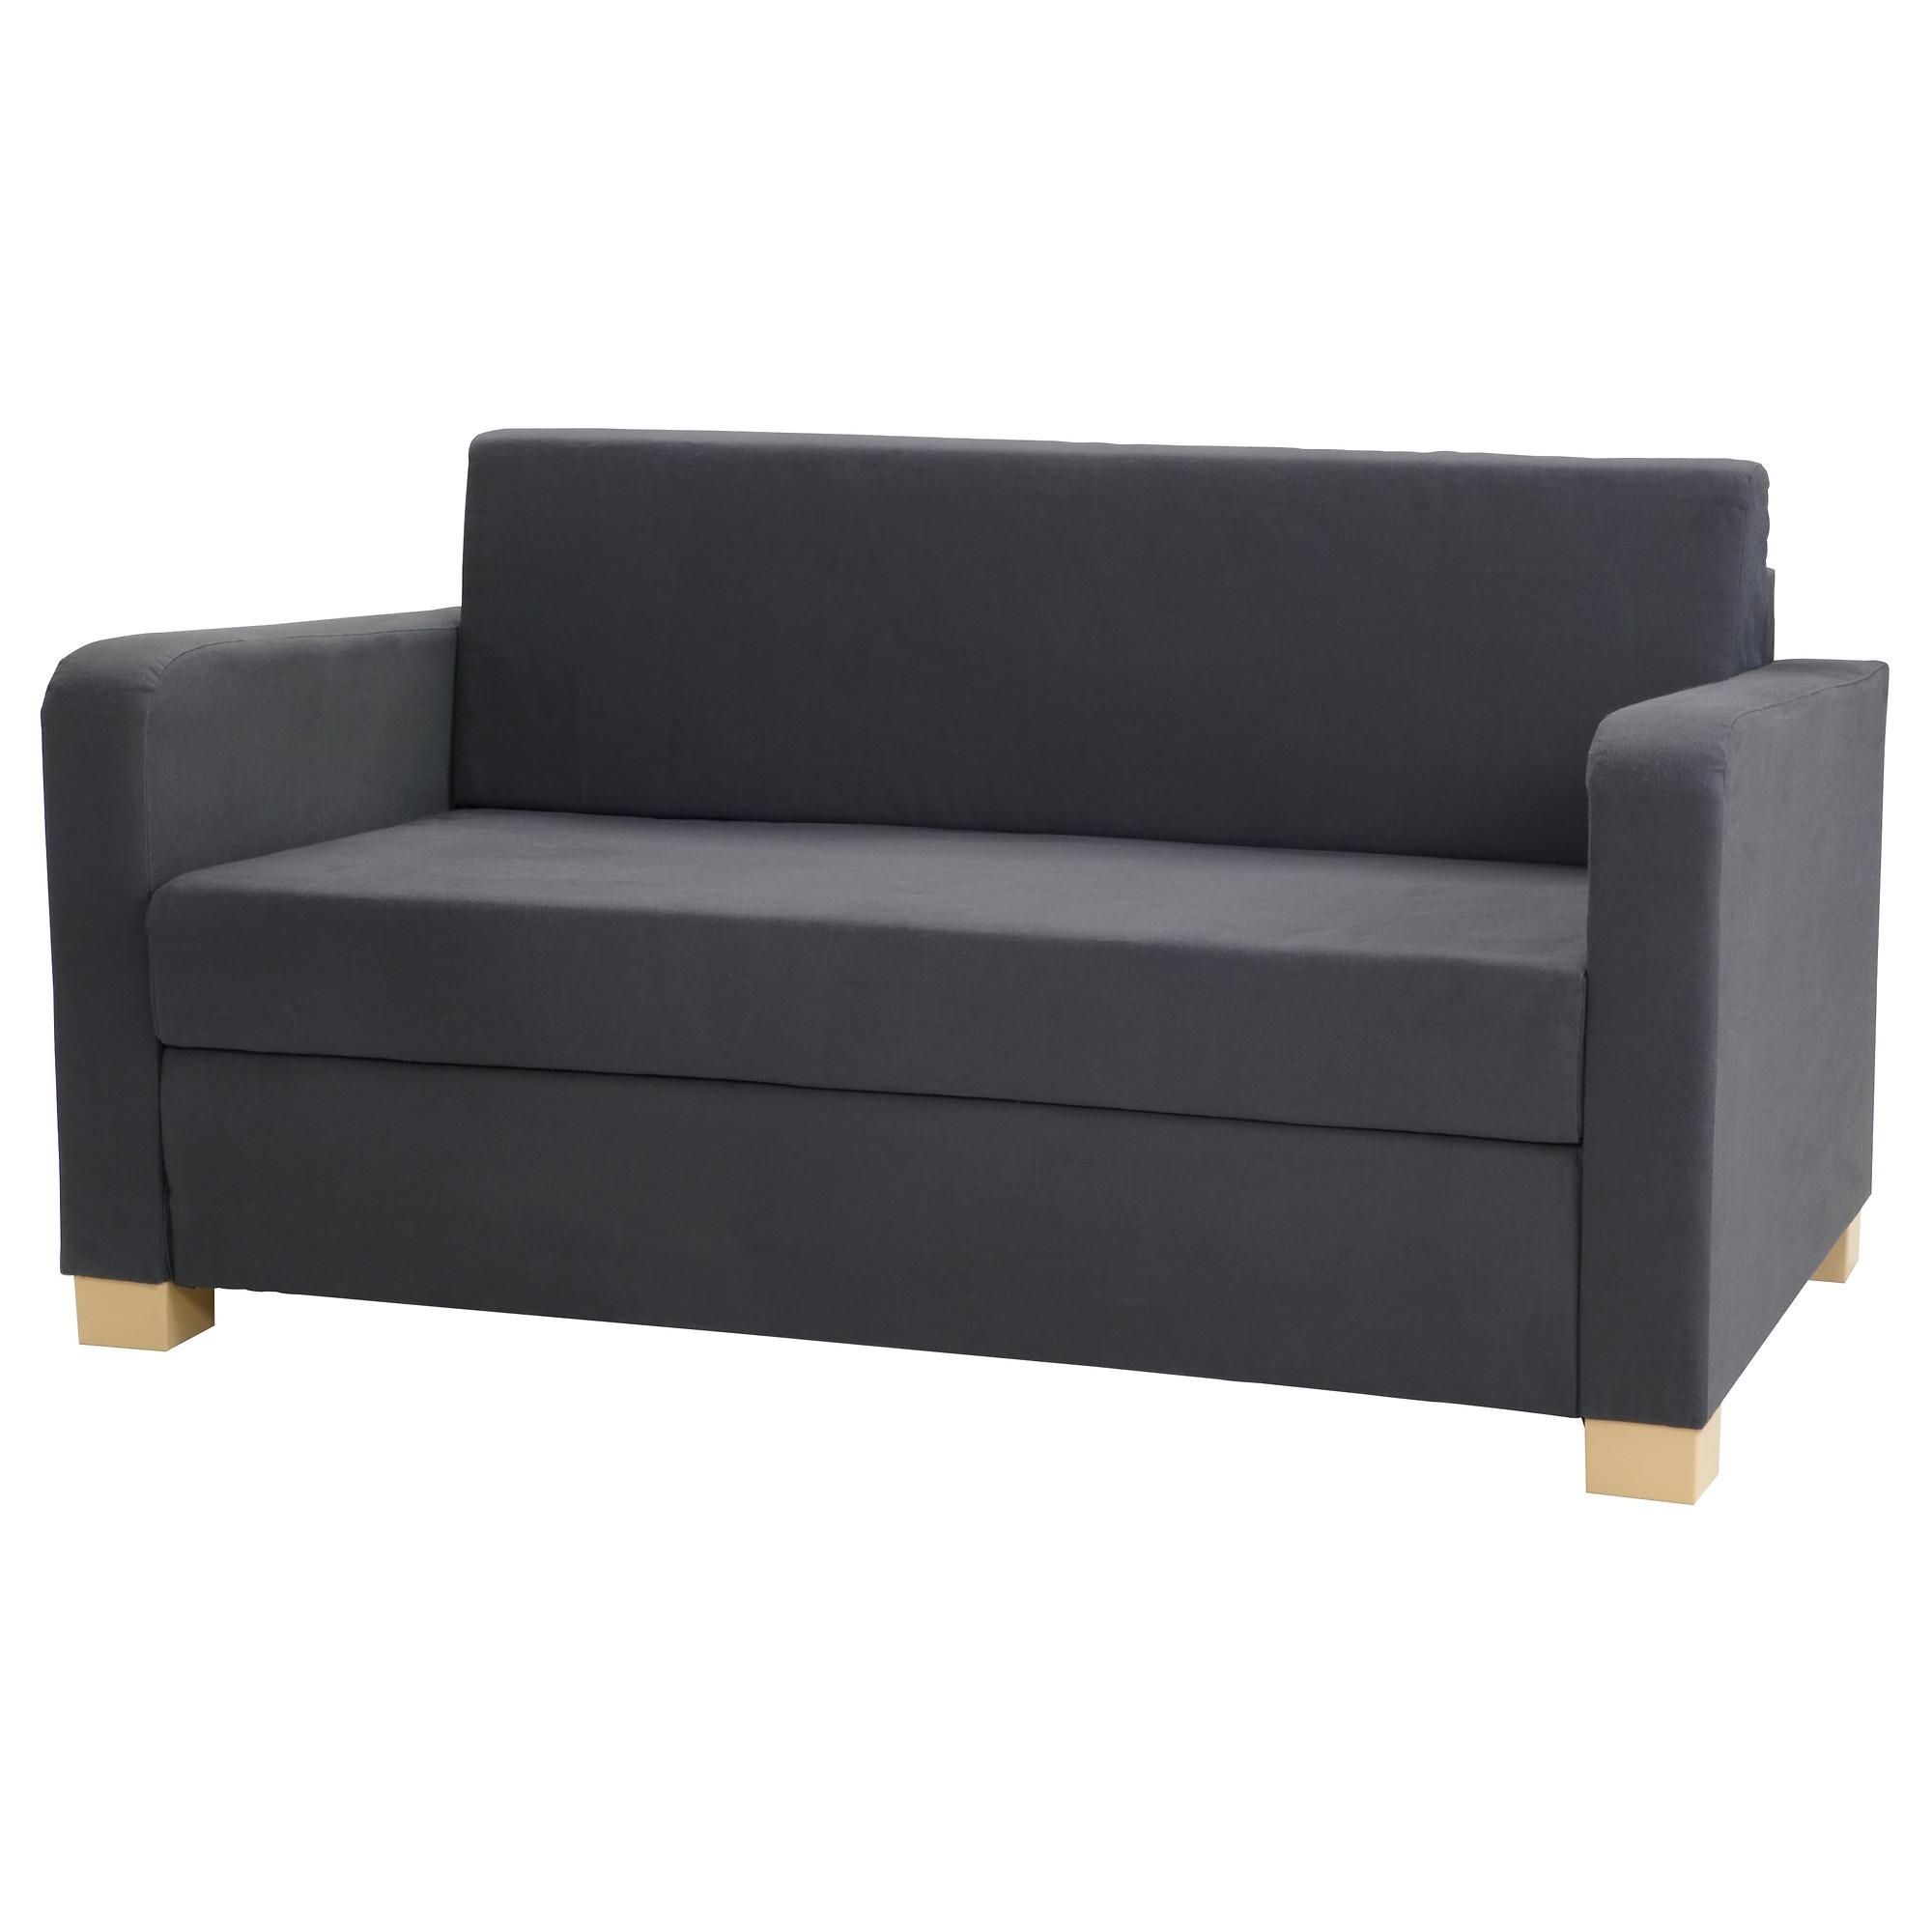 Sleeper Sofas & Chair Beds – Ikea Inside Sofa Chairs Ikea (View 11 of 20)